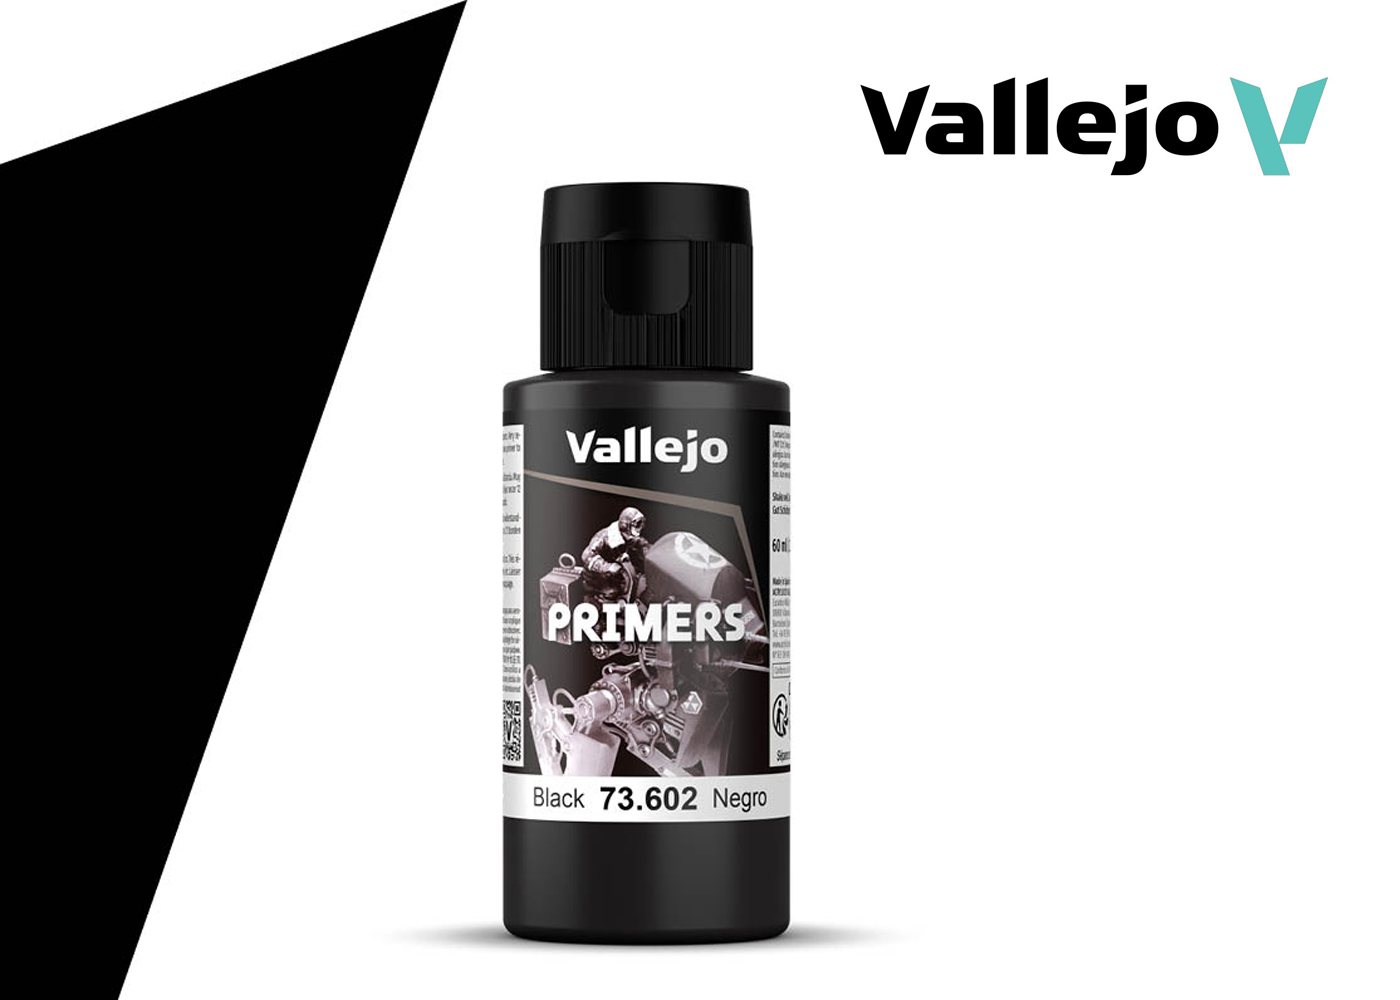 Vallejo Premium Colour 60ml - White Primer